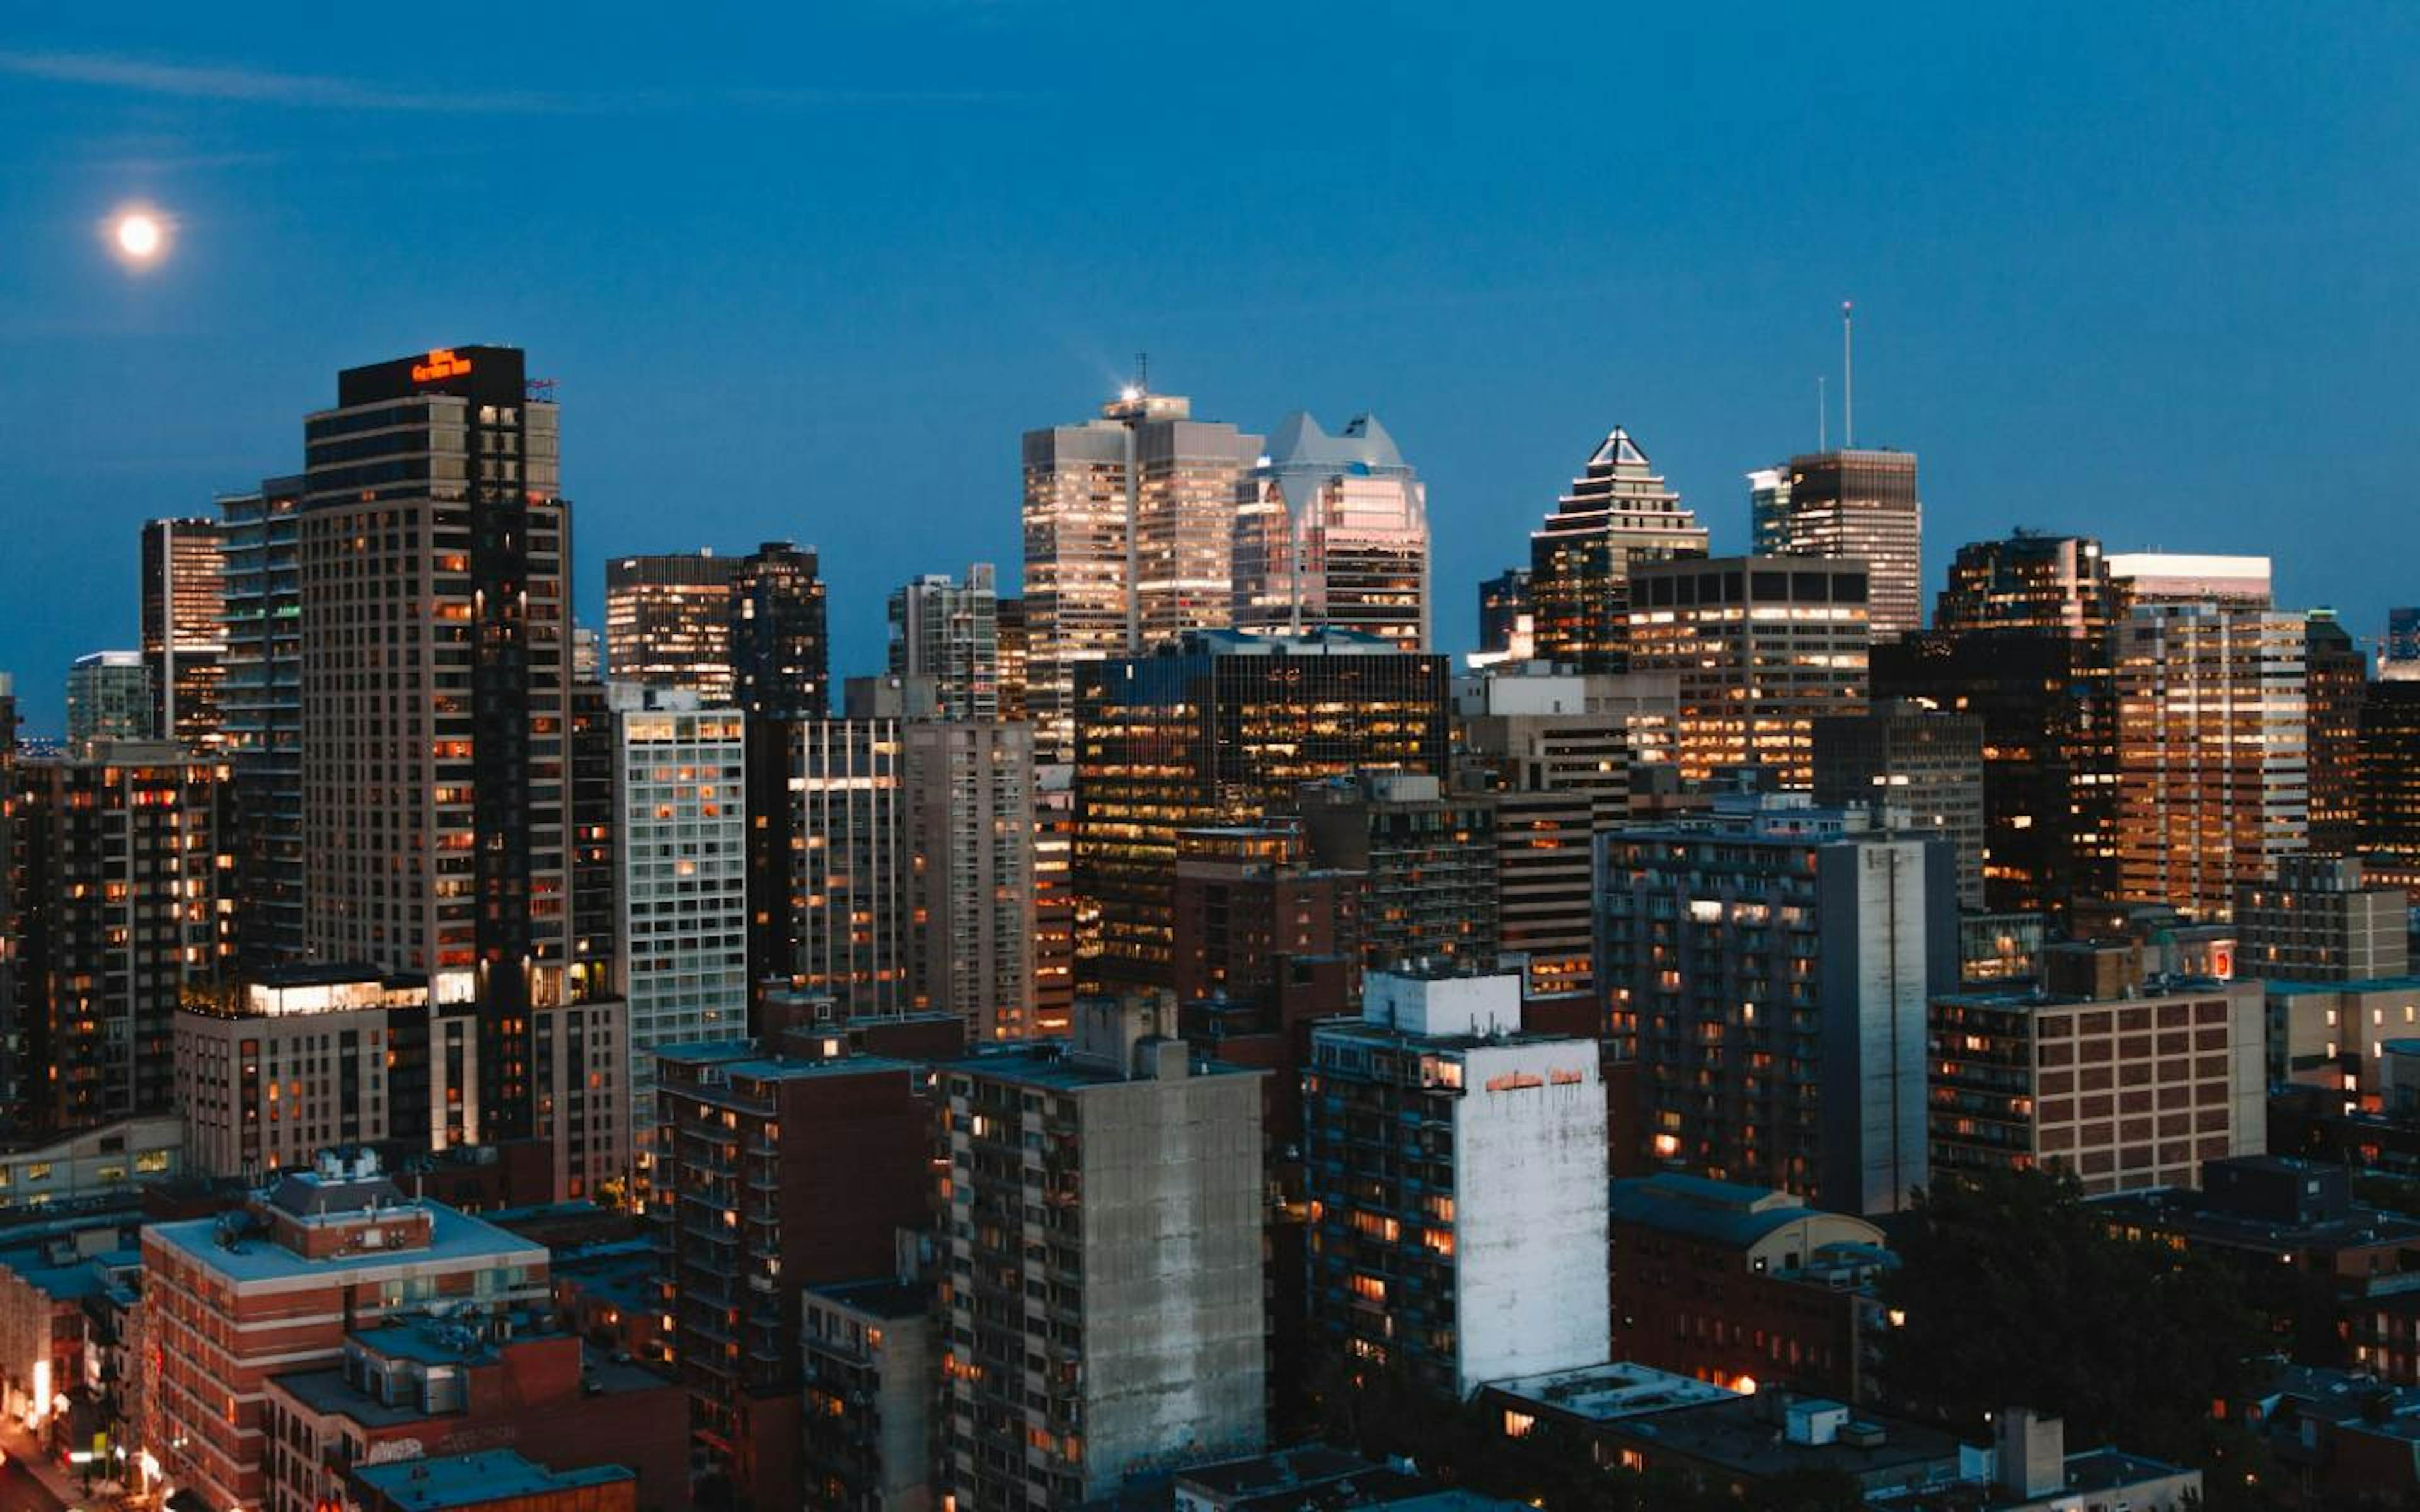 Quebec City image